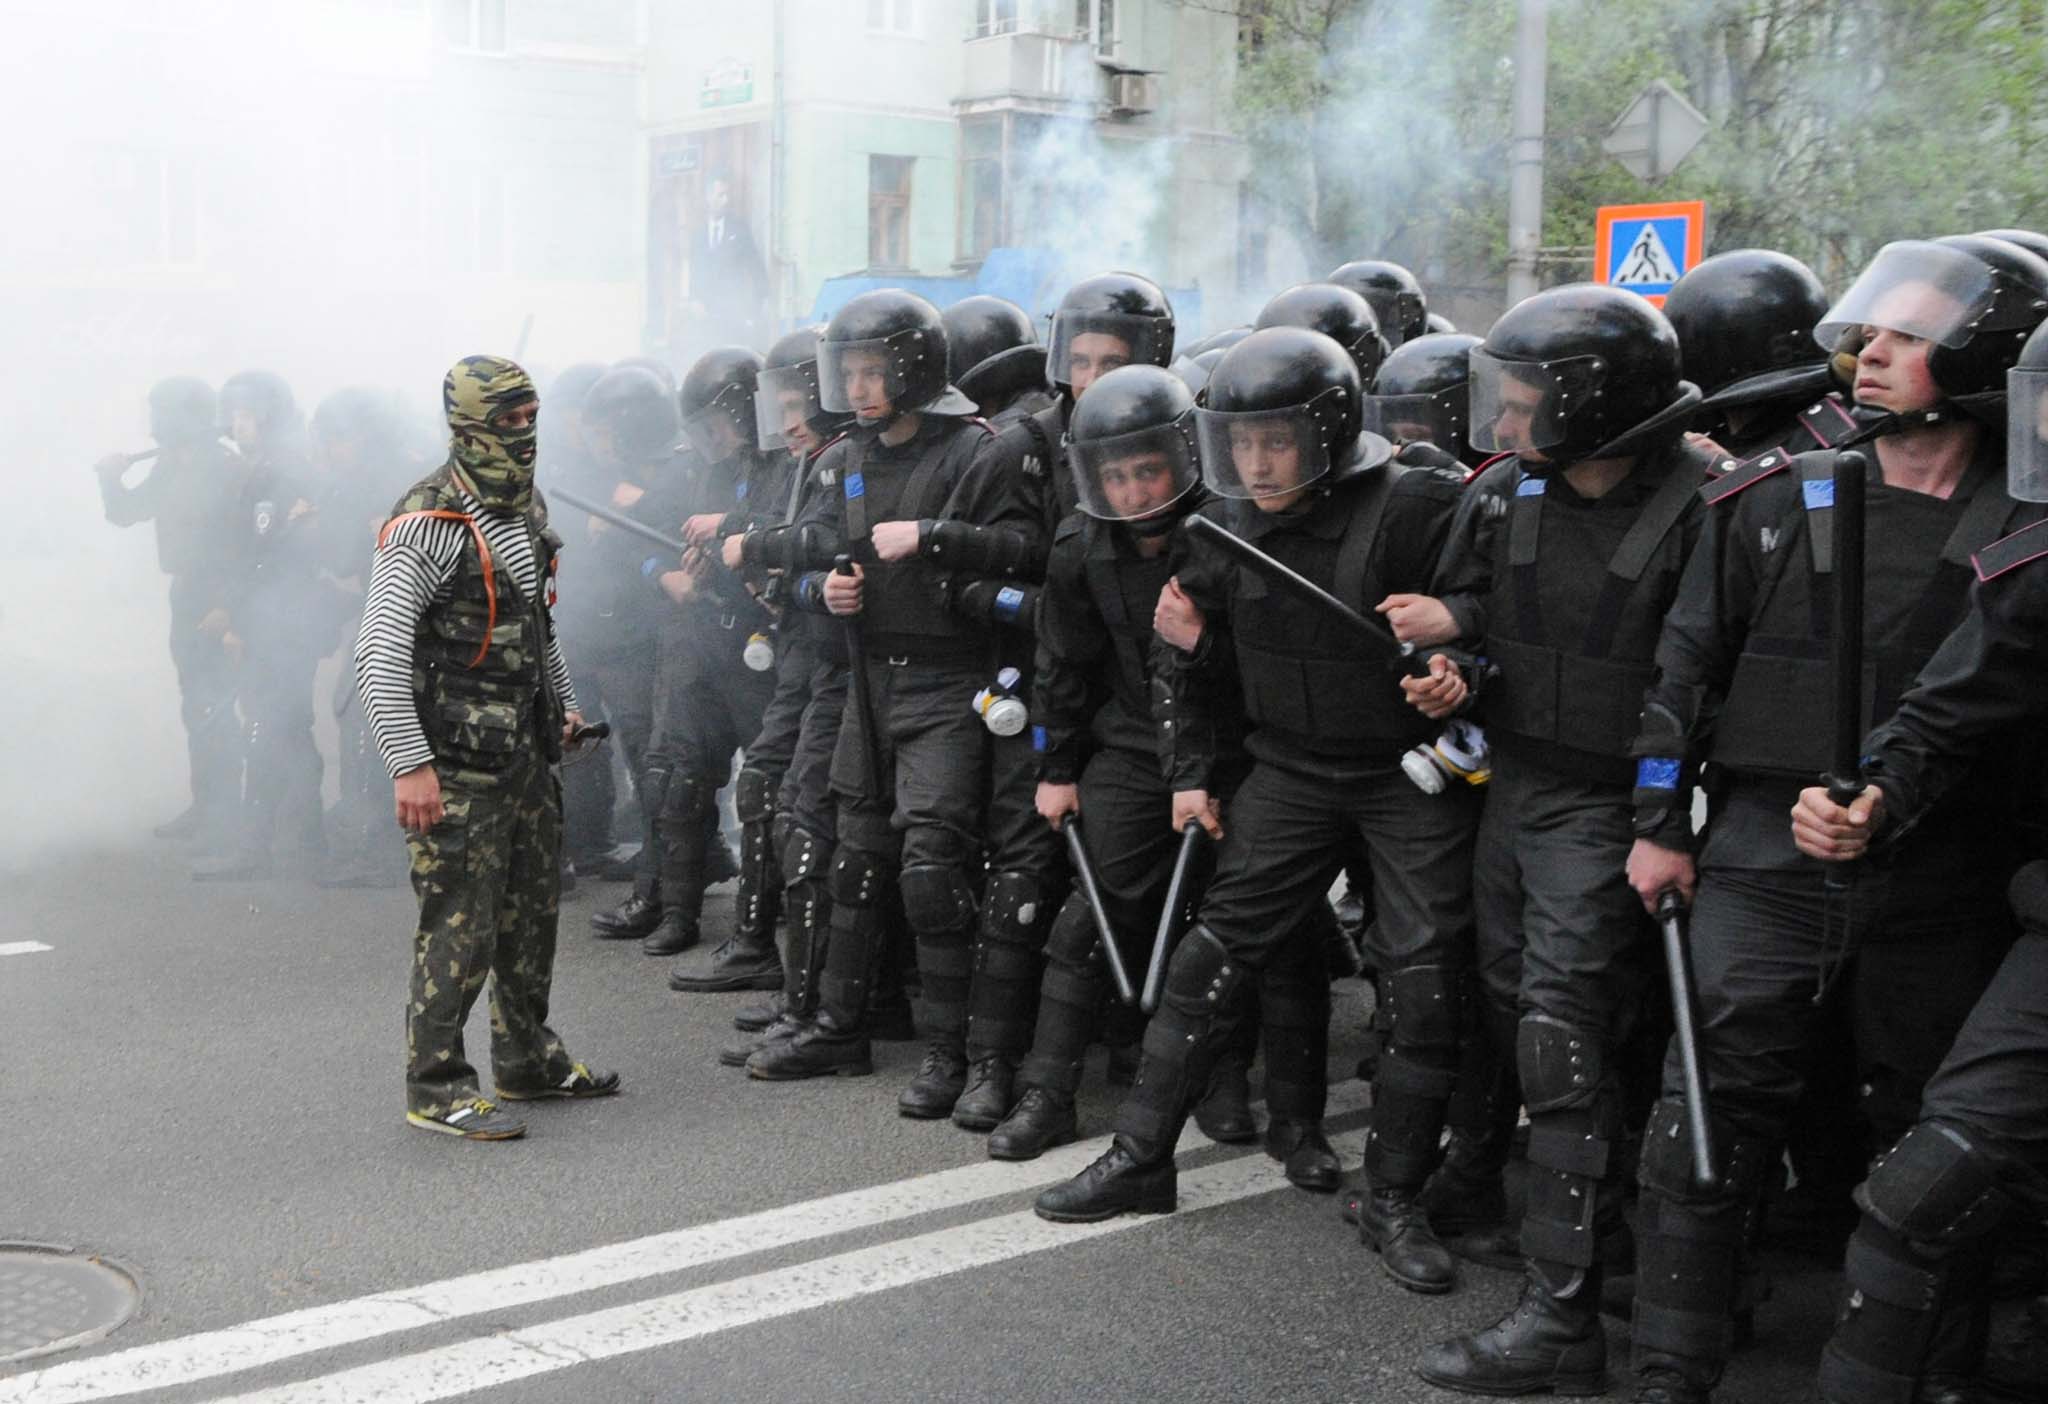 Donetsk separatists